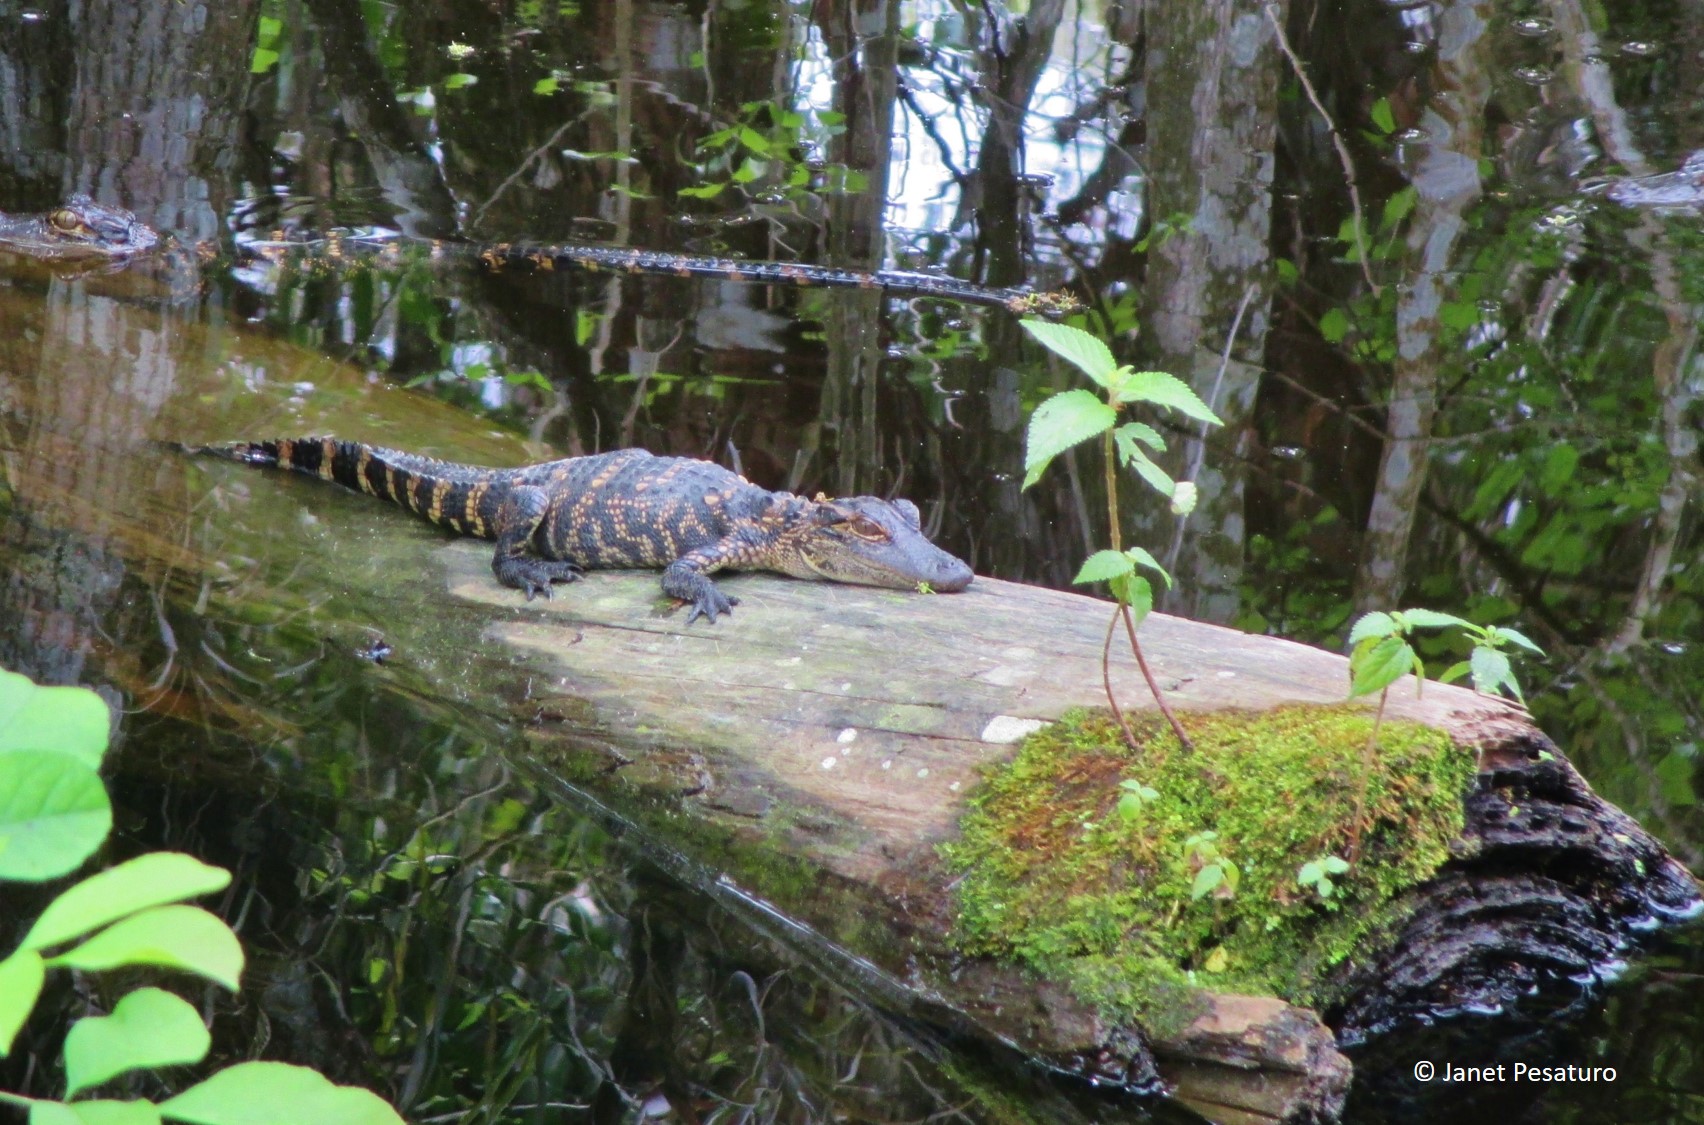 baby alligator basking in a log